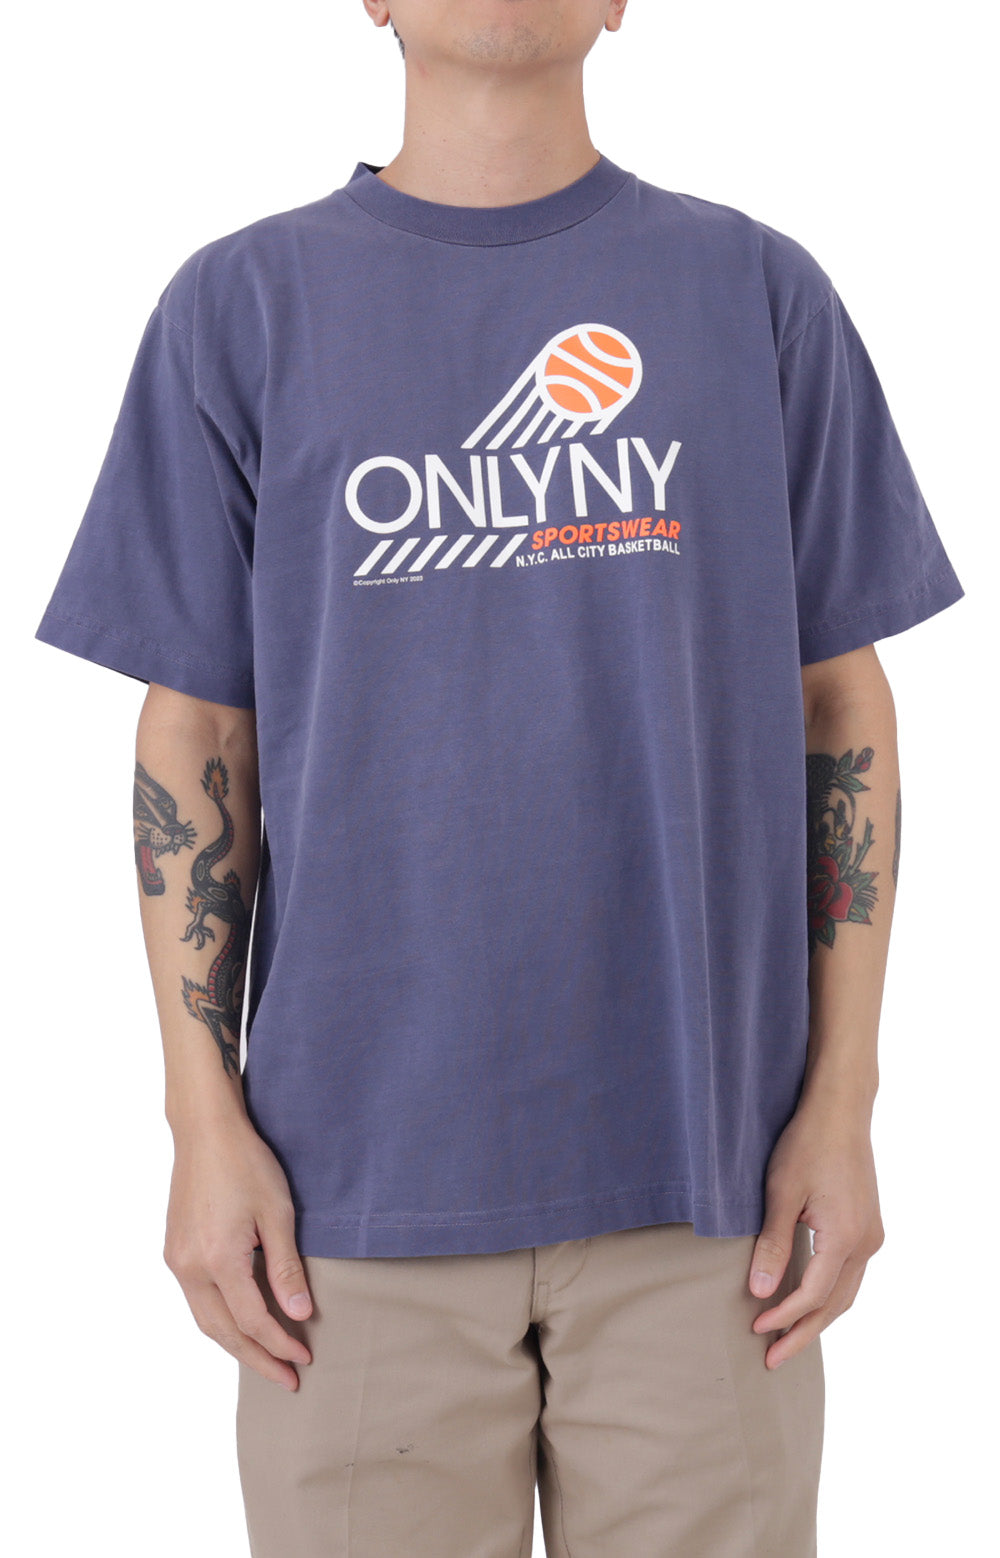 All City Basketball T-Shirt - Slate